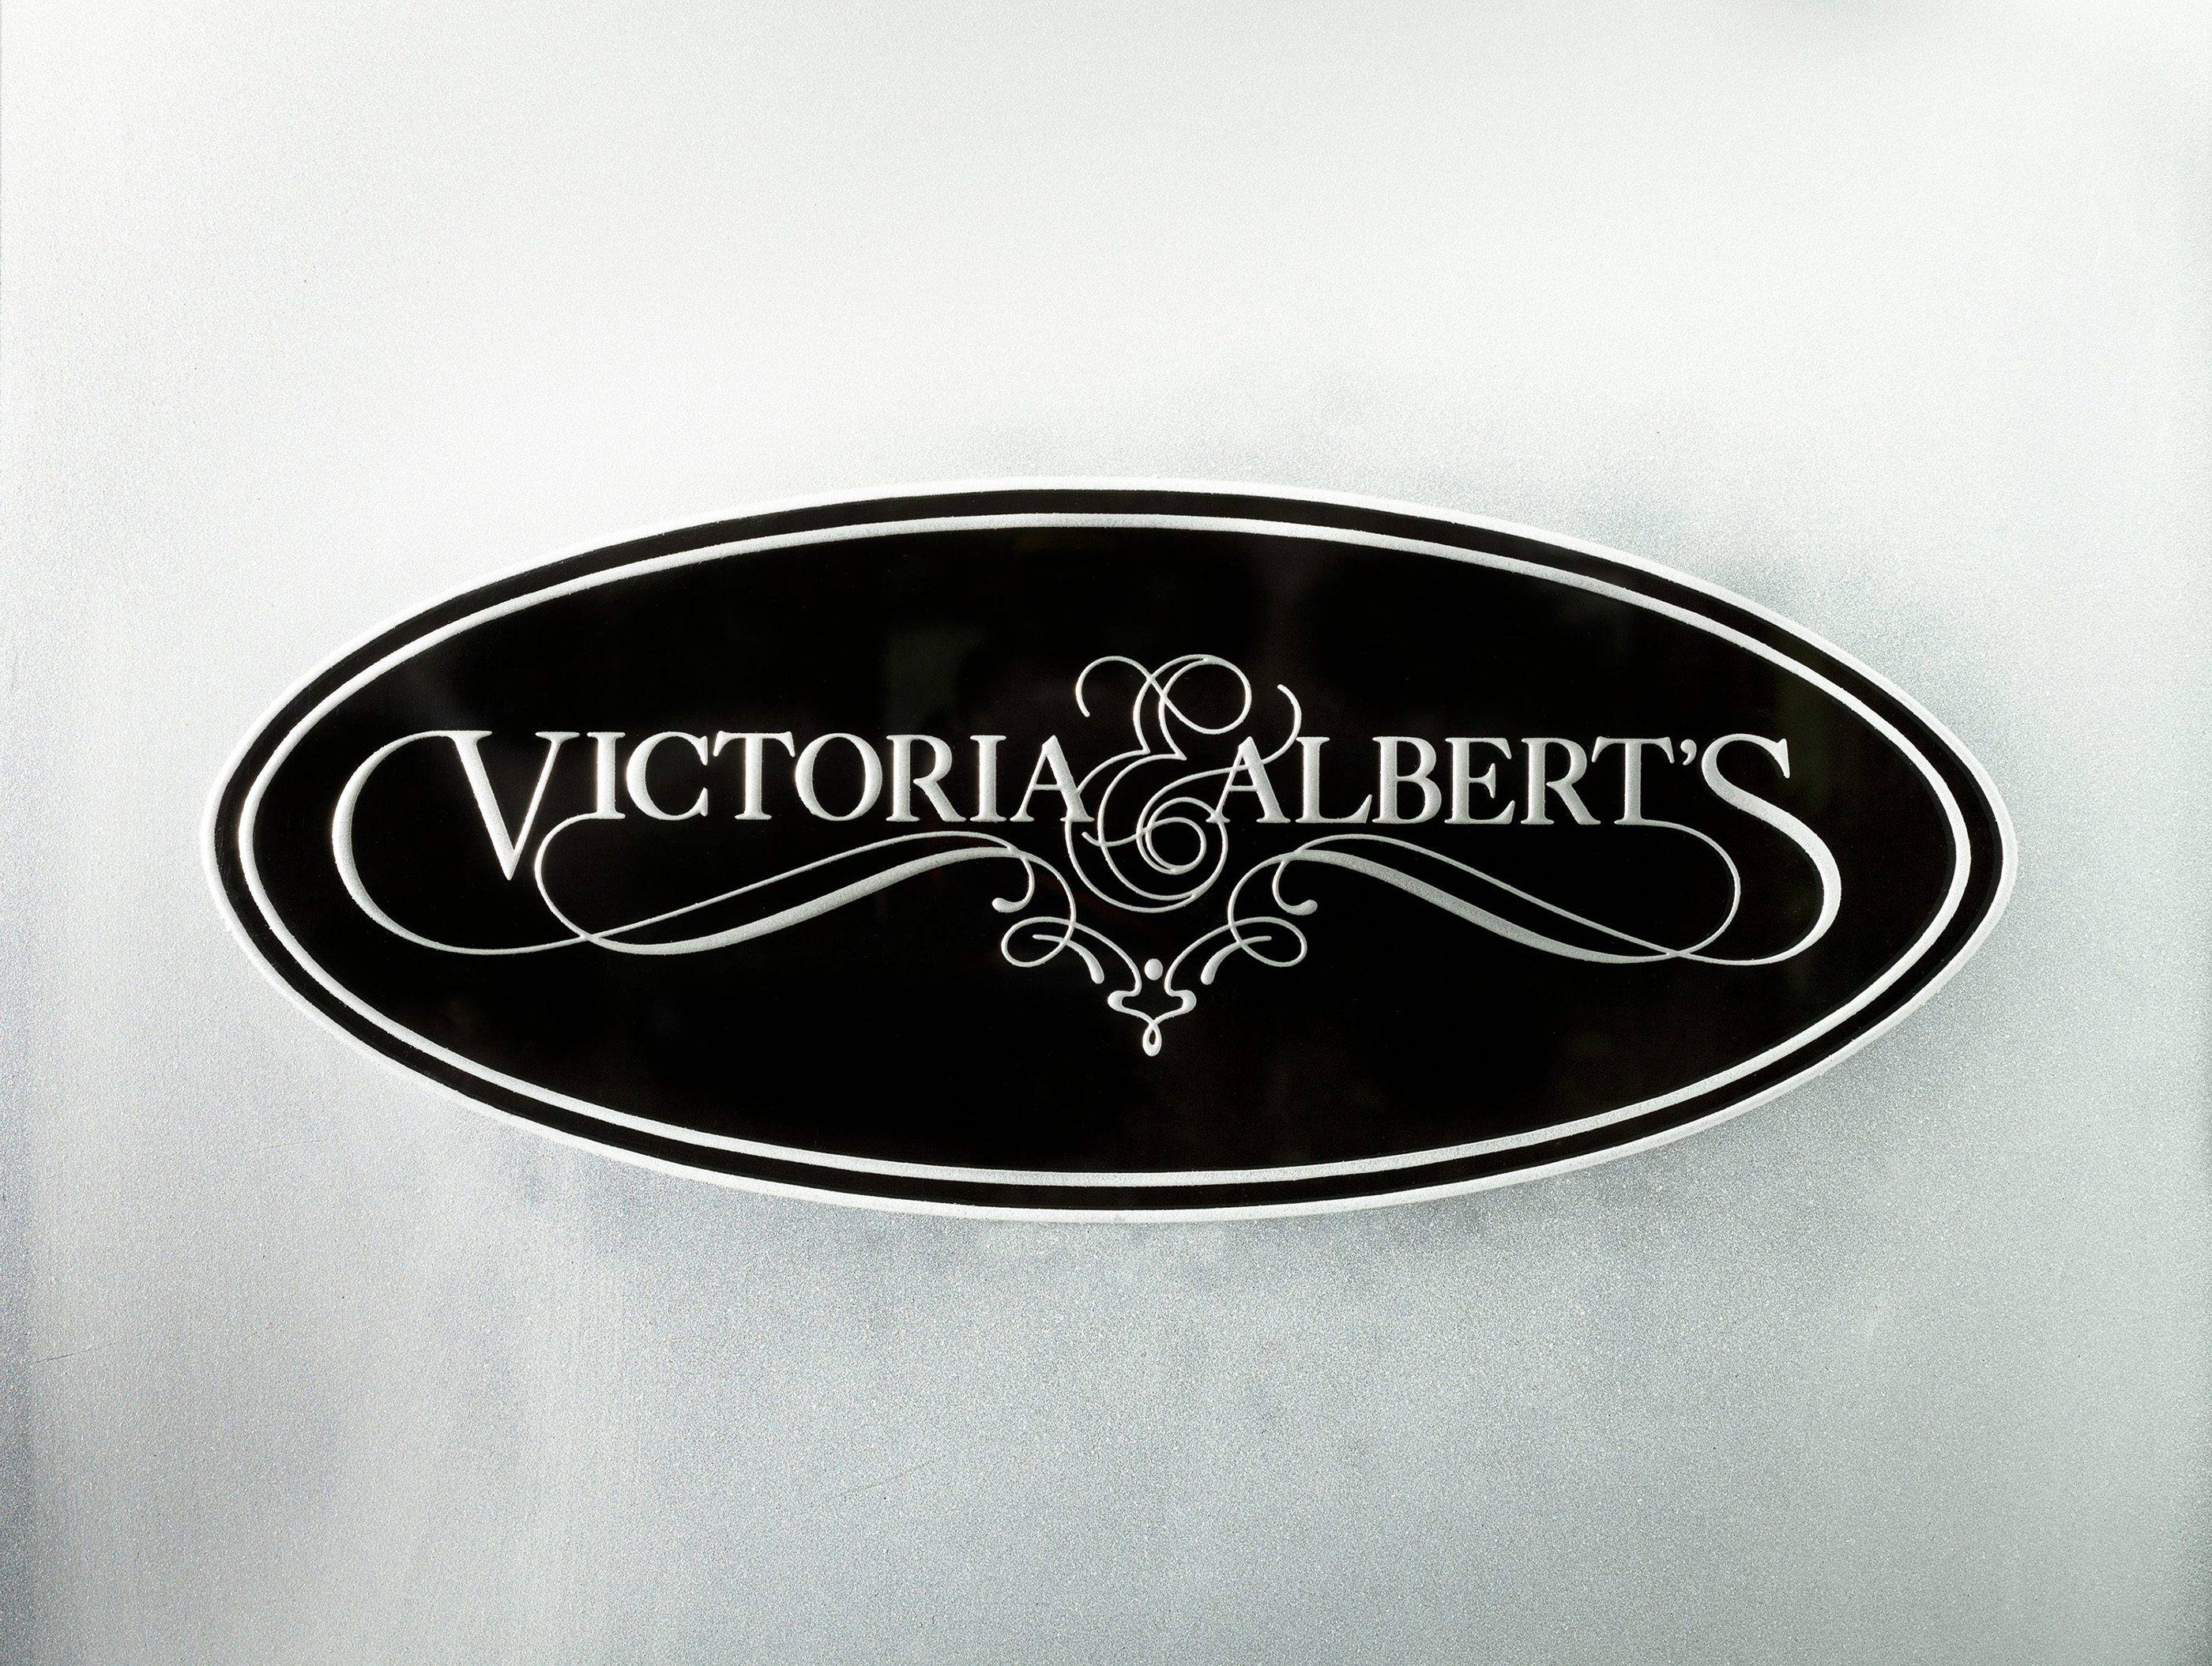 Victoria and Albert's signage